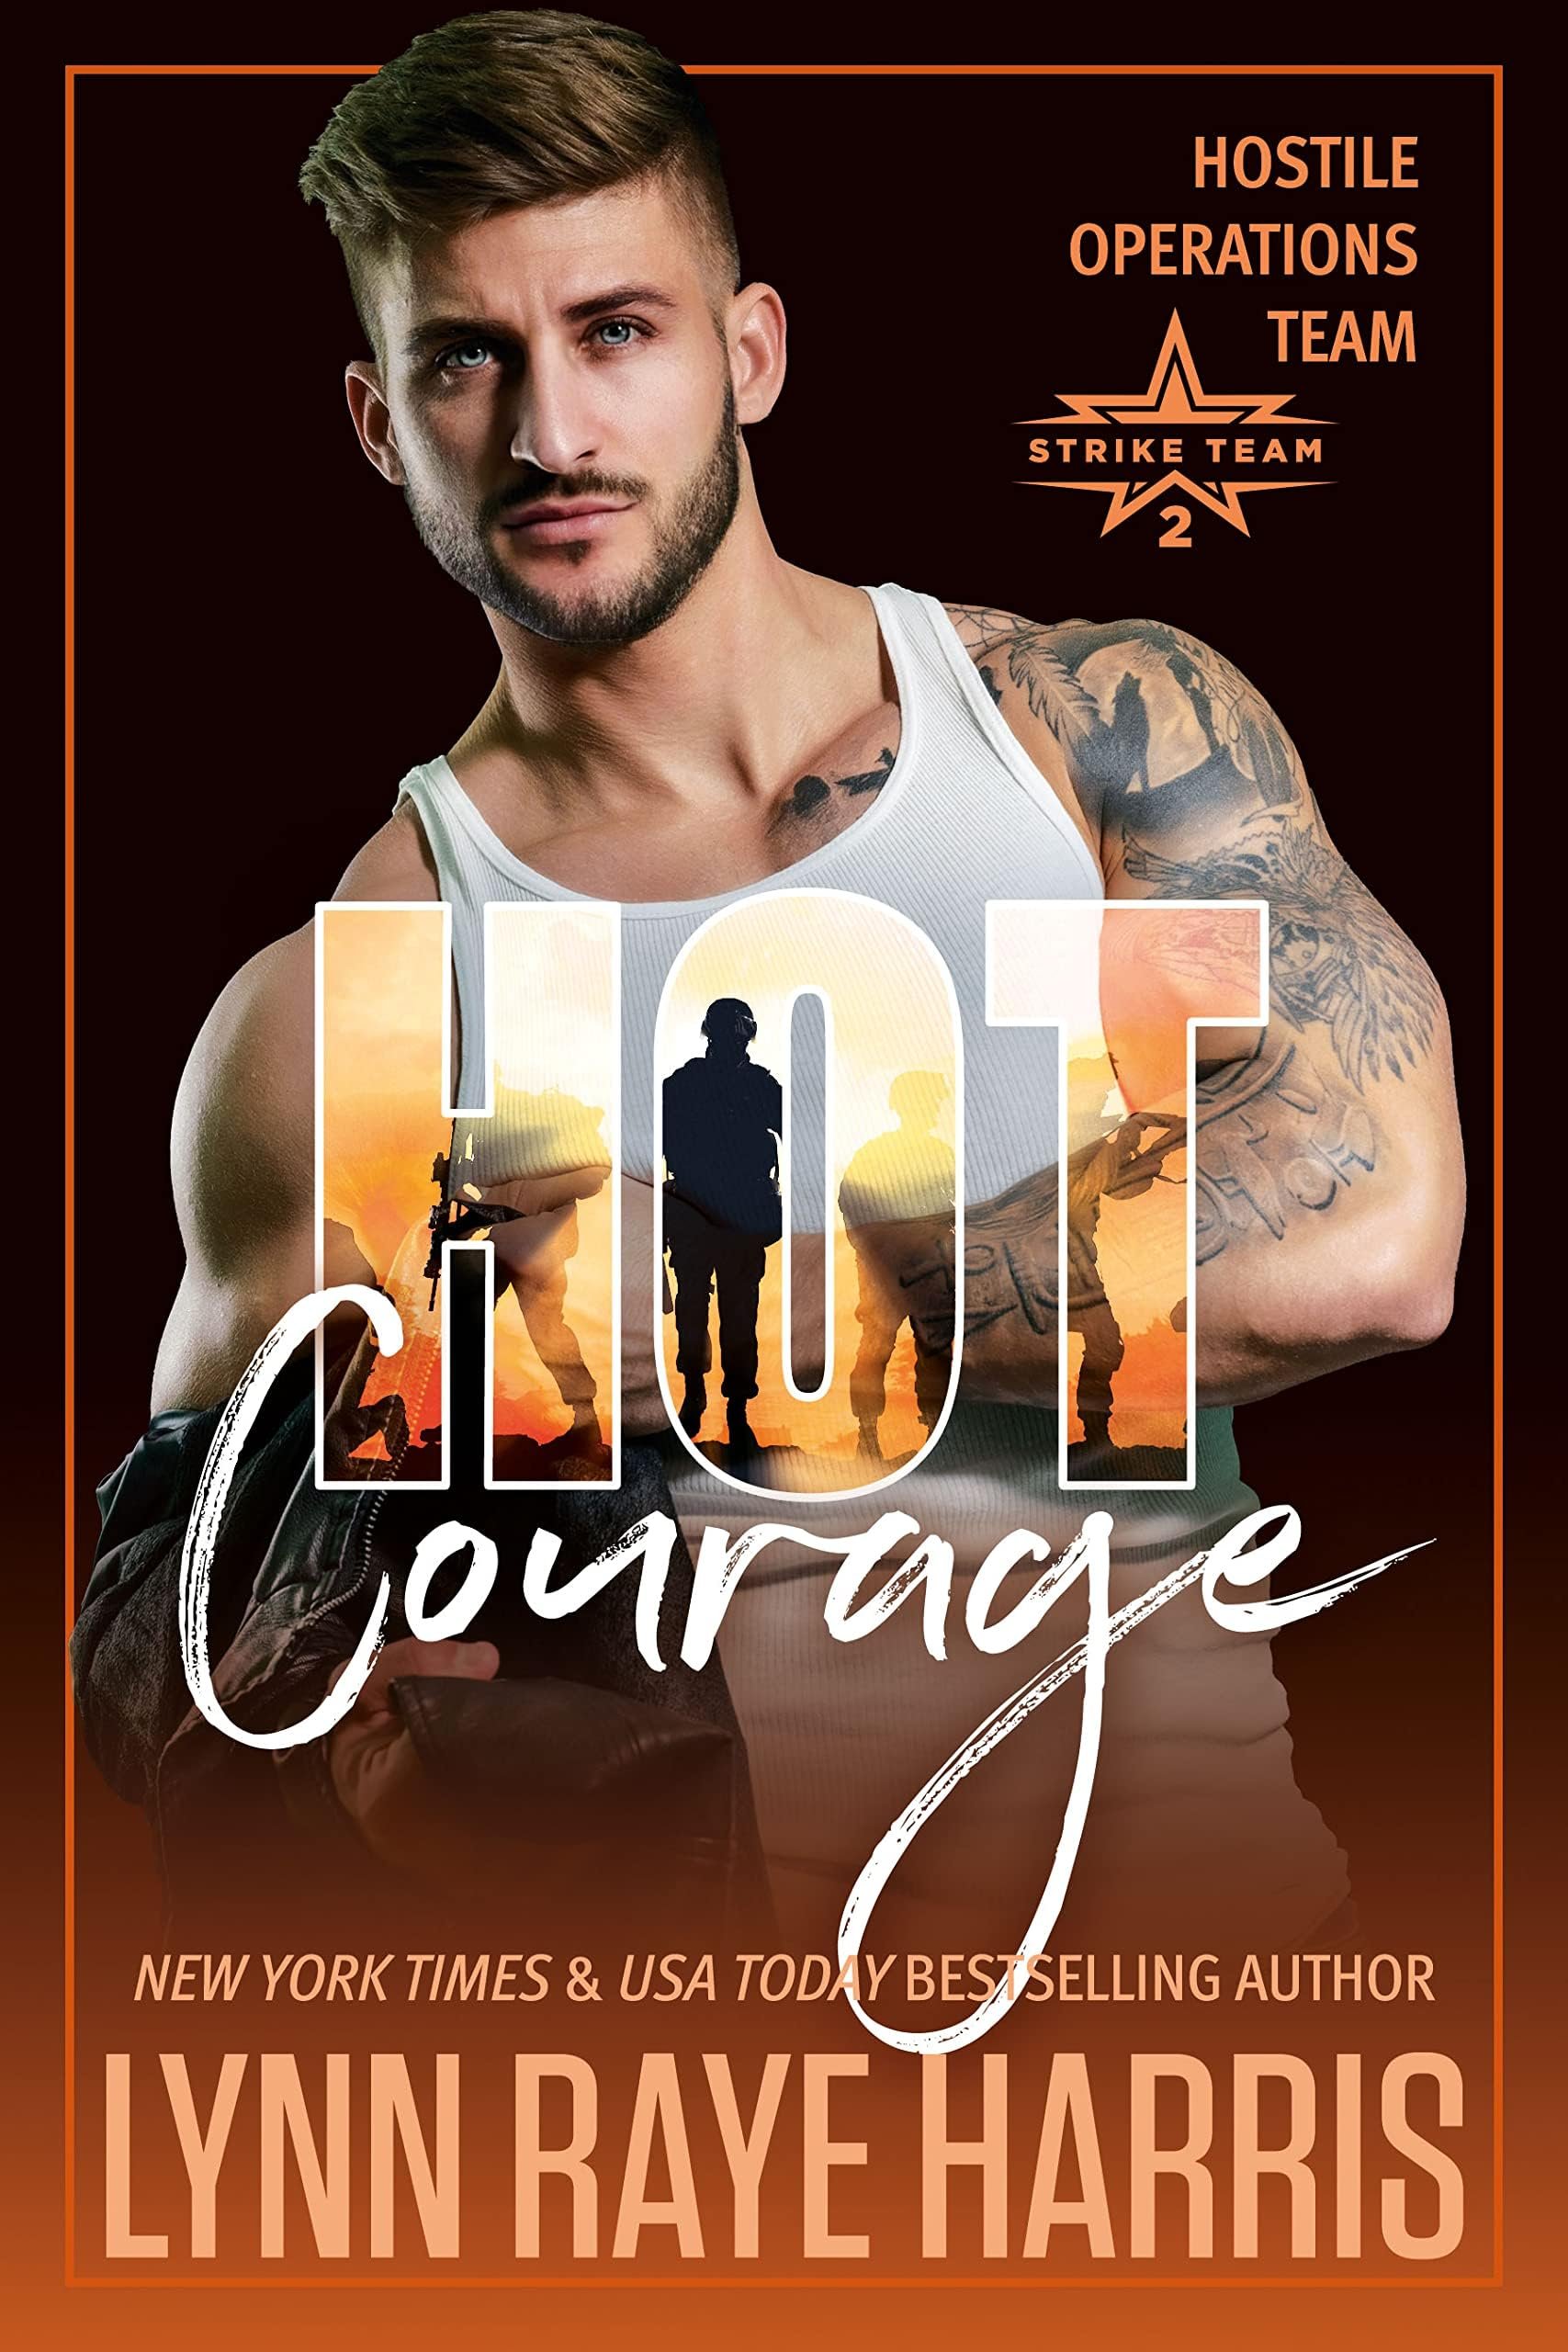 HOT Courage: Hostile Operations Team® - Strike Team 2 Cover